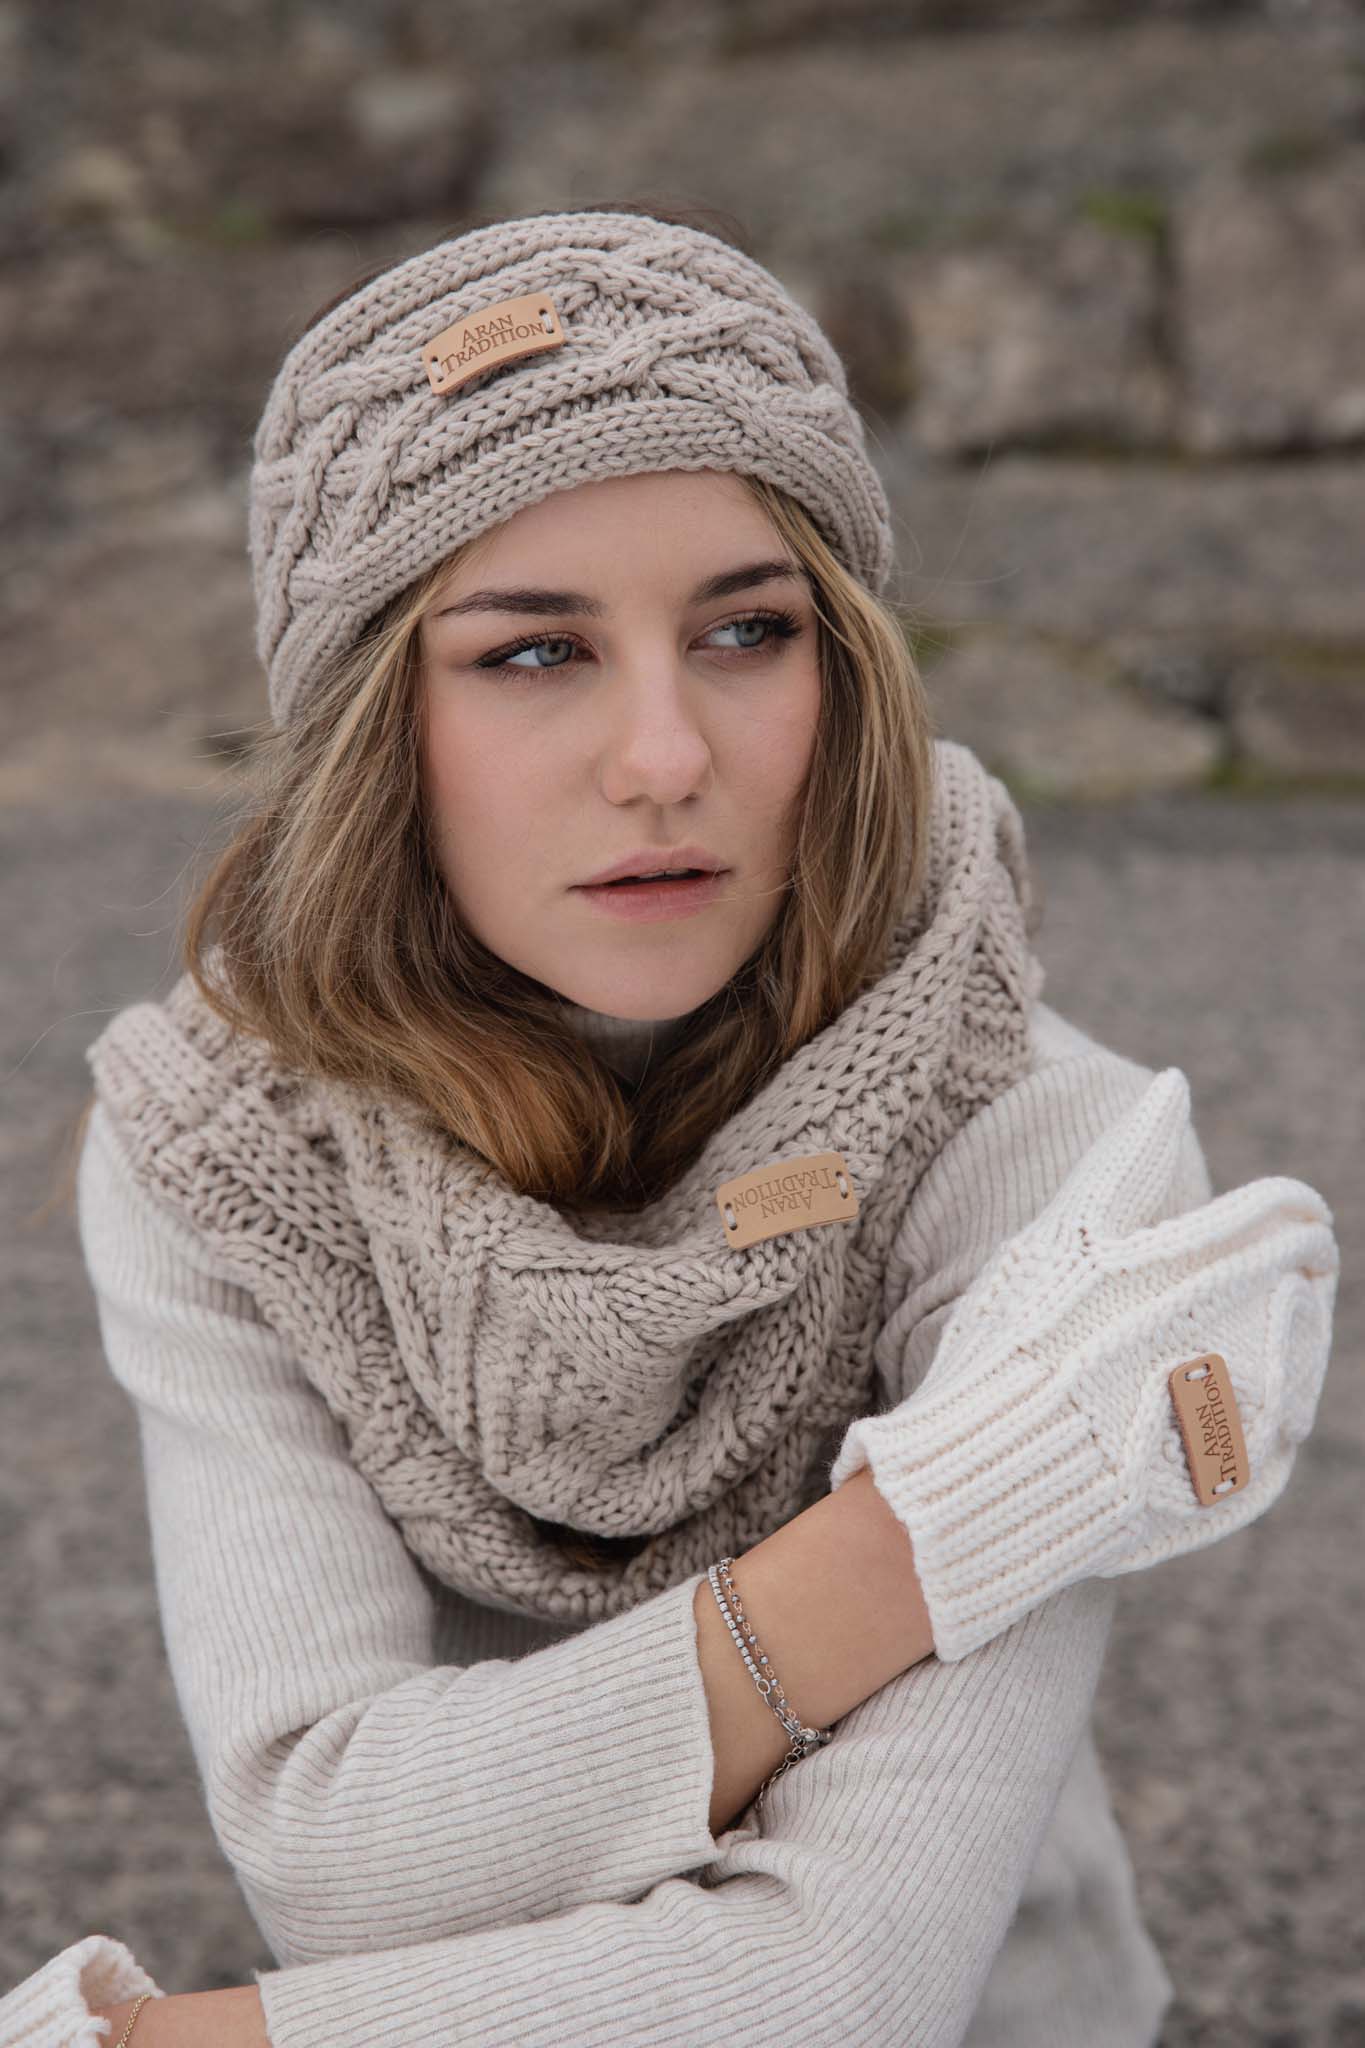 Aran Traditions Winter Hats: Cozy and Stylish Headwear